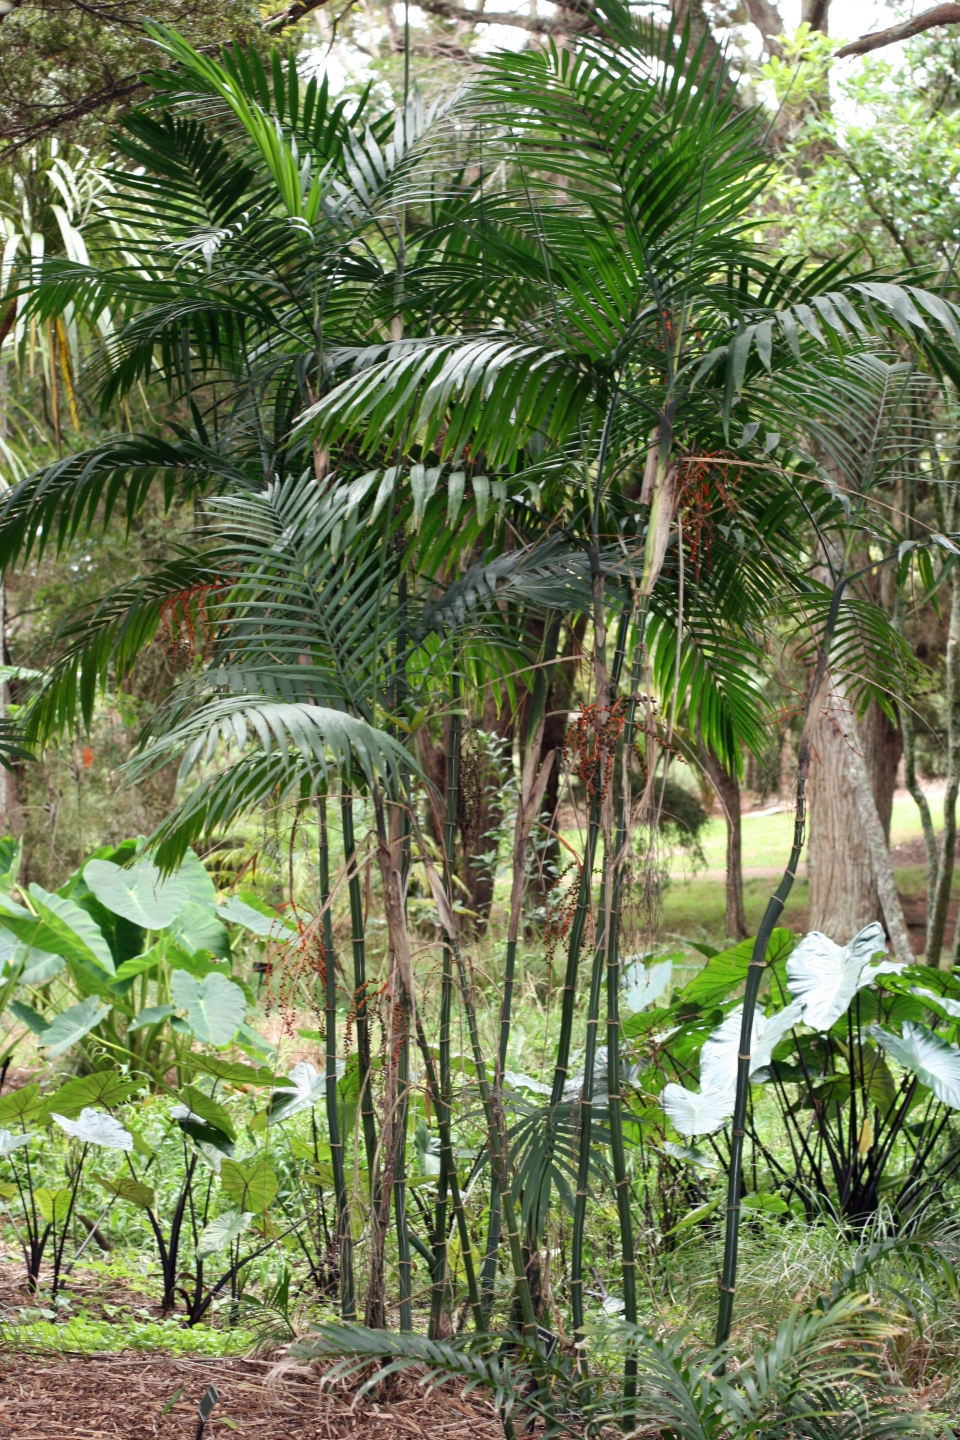 Chamaedorea costaricana